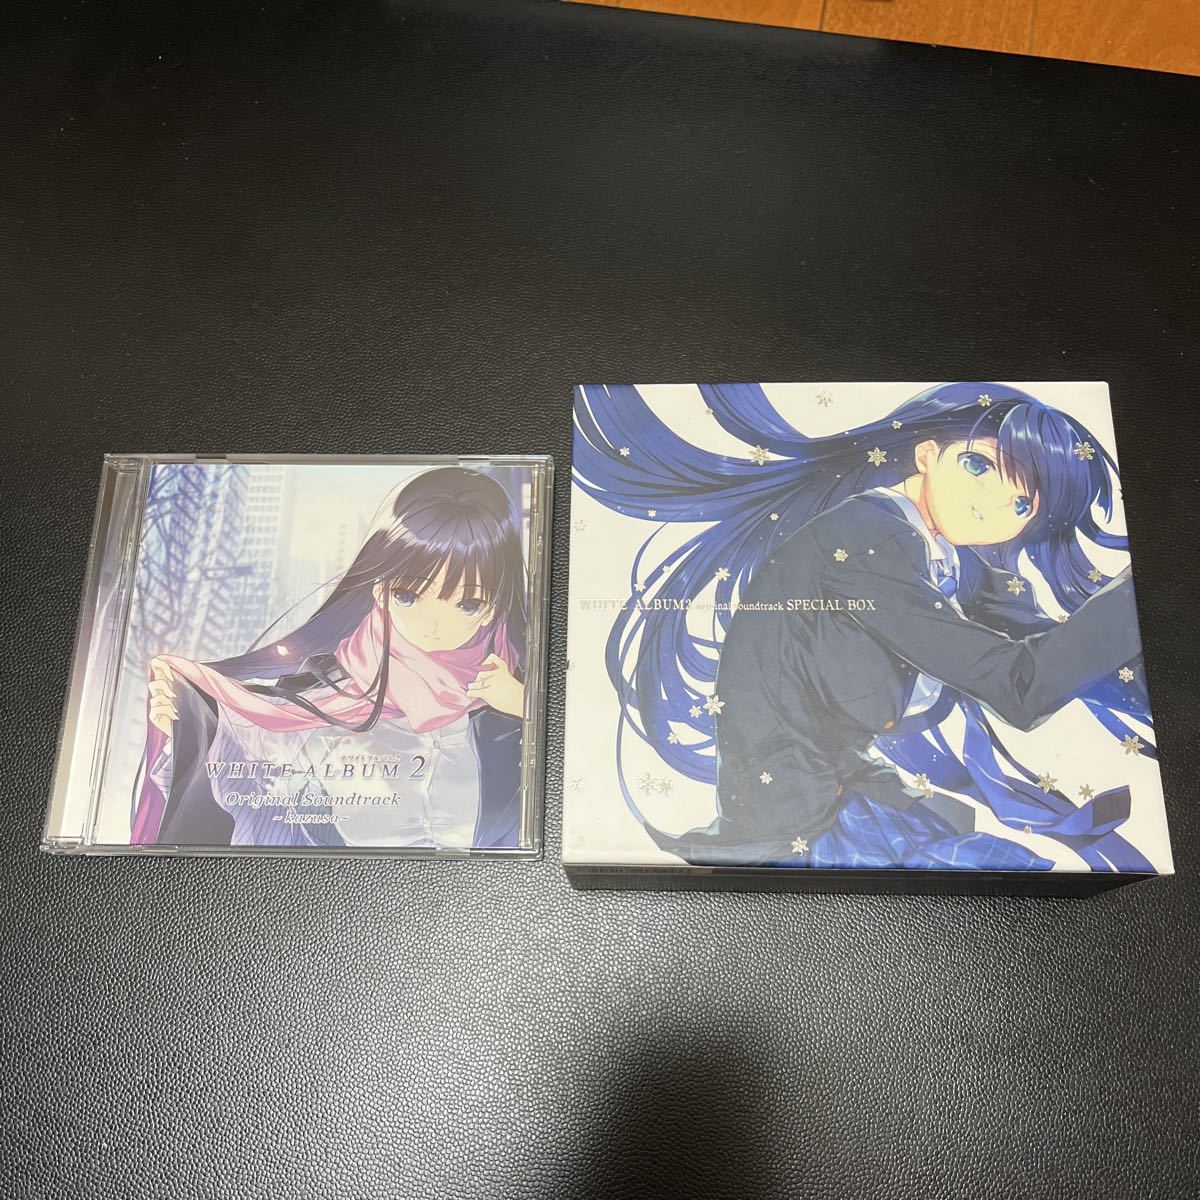 White Album2 original soundtrack Special Box + kazusa｜PayPayフリマ